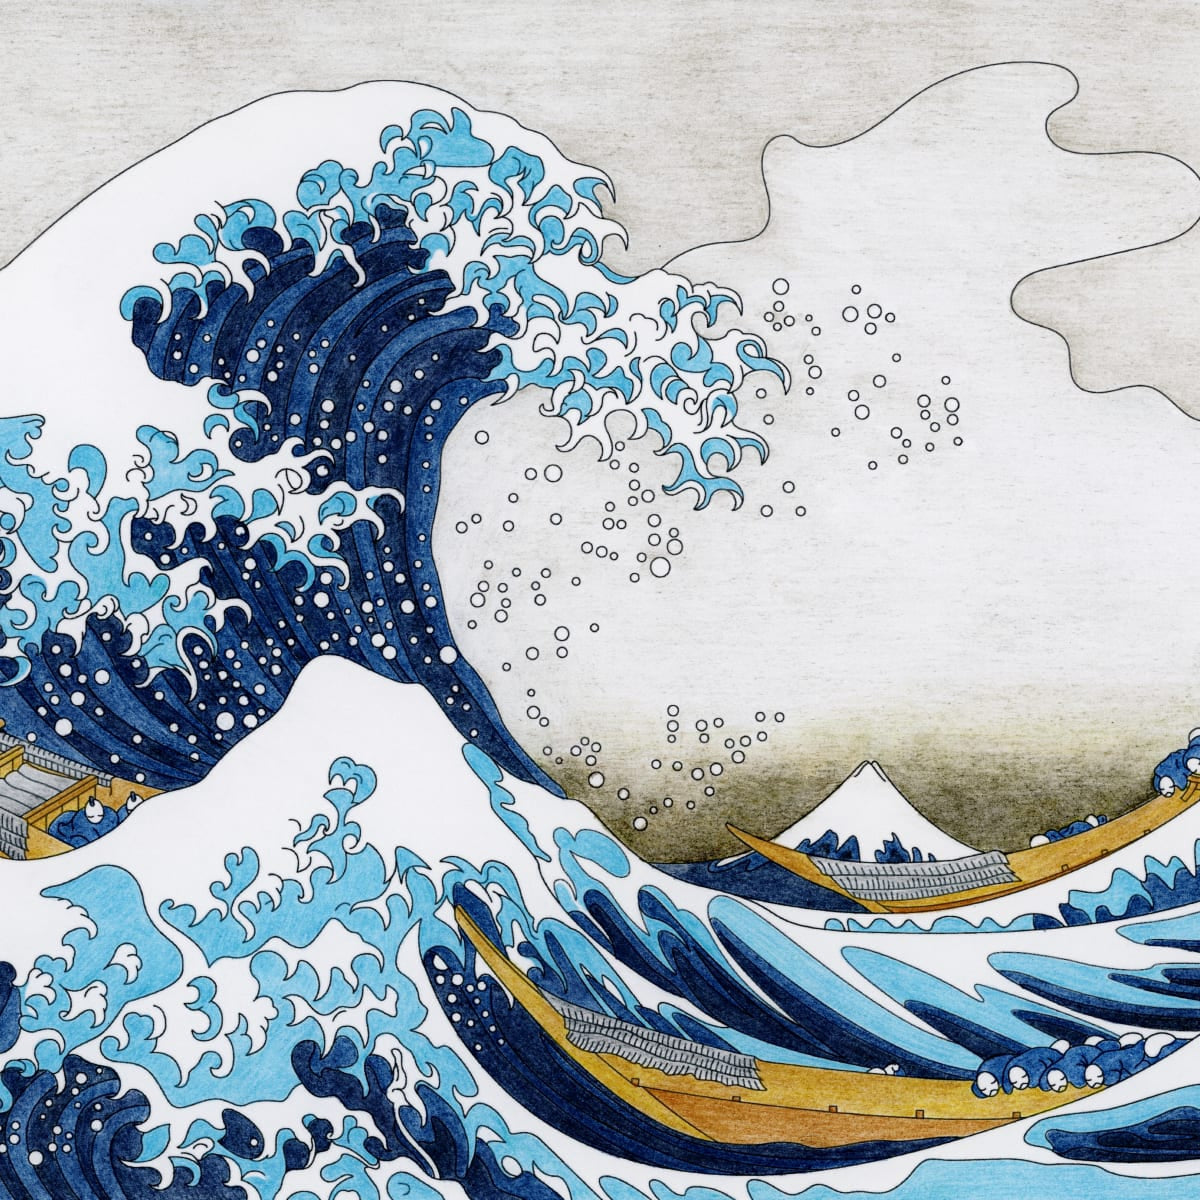 The Great Wave off Kanagawa by Hokusai Great Wave Art Great Wave Poster  Great Wave Print Japanese Wall Art Japanese Poster Japan Poster Art 